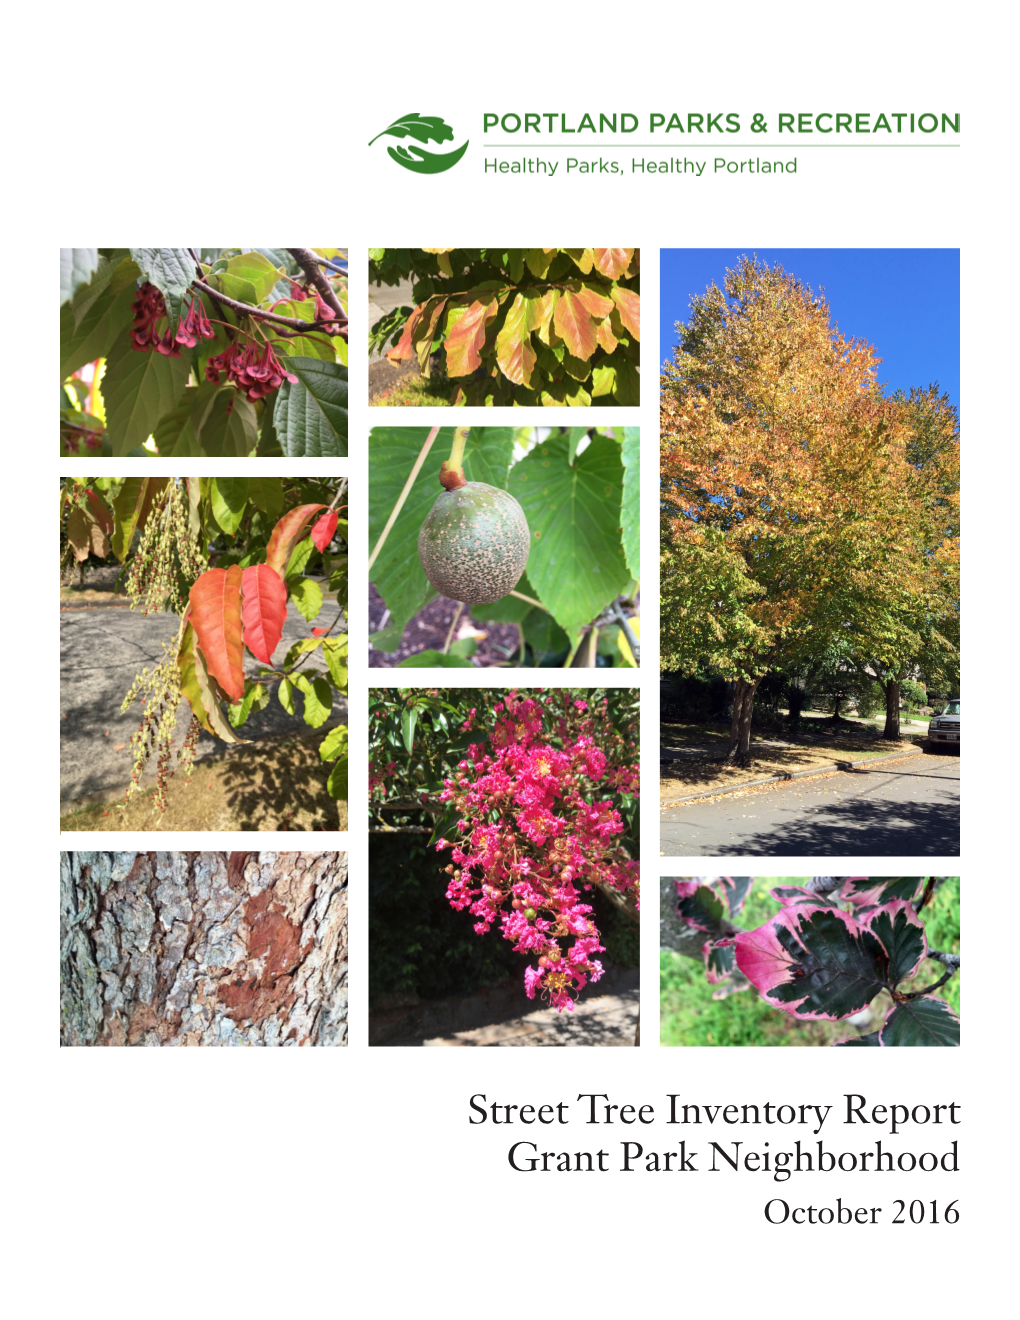 Street Tree Inventory Report Grant Park Neighborhood October 2016 Street Tree Inventory Report: Grant Park Neighborhood October 2016